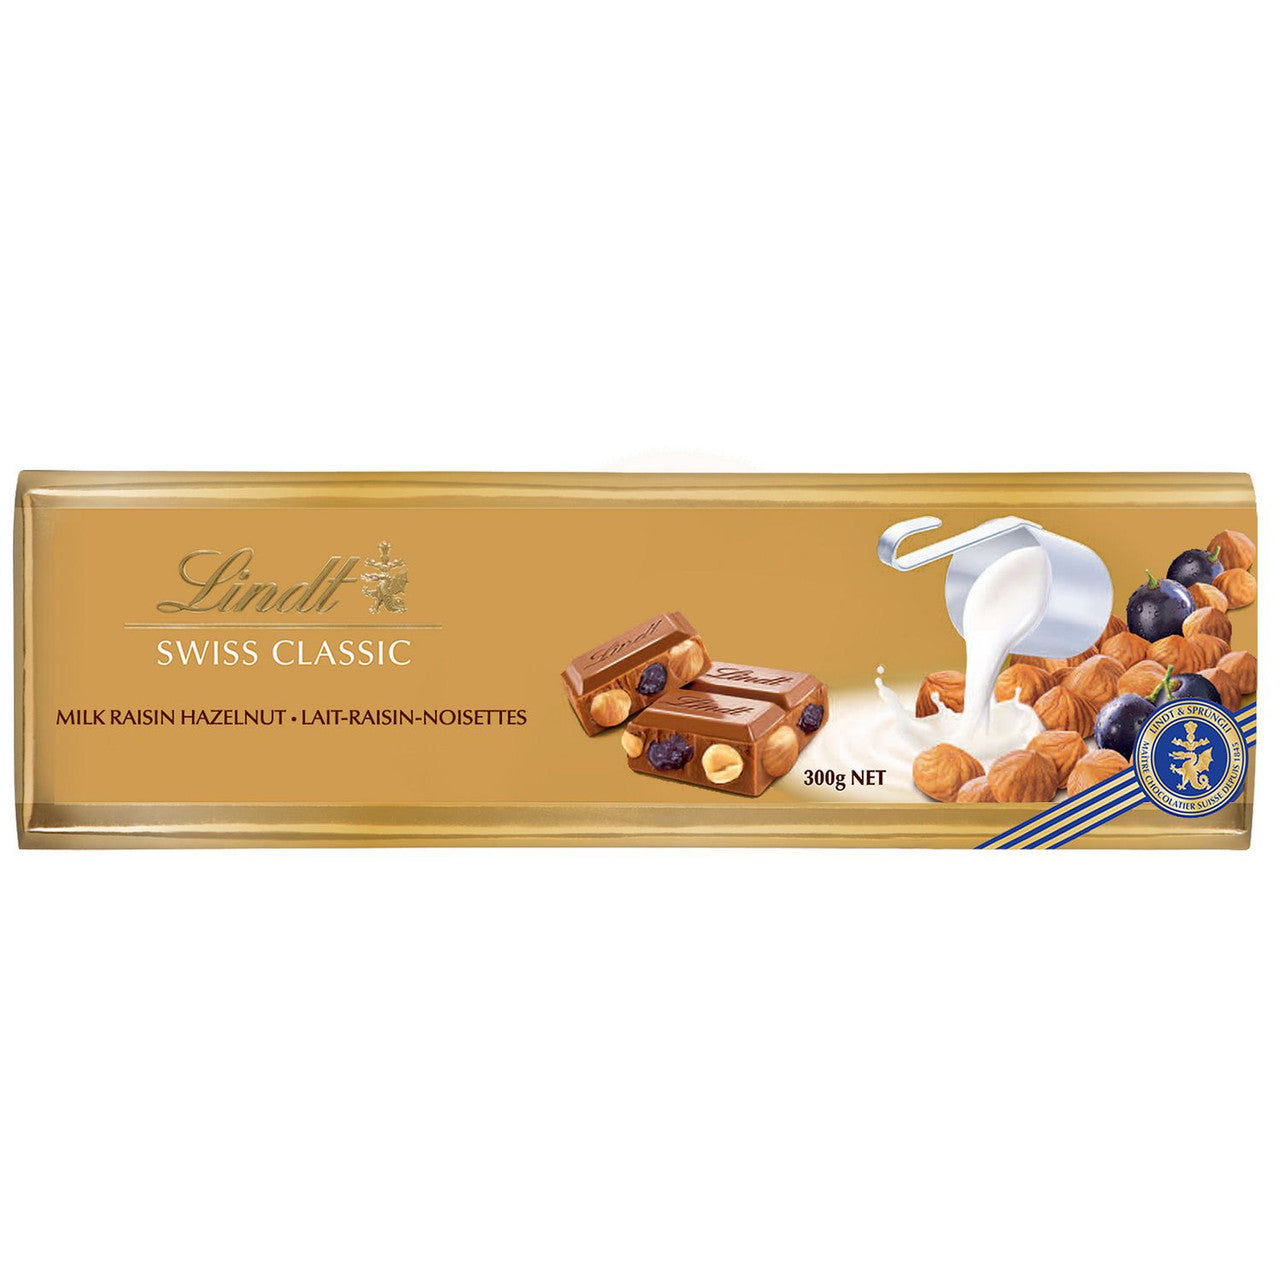 Lindt Swiss Classic Gold Milk Raisin Hazelnut Chocolate Bar, 300g/10.6oz, (Imported from Canada)